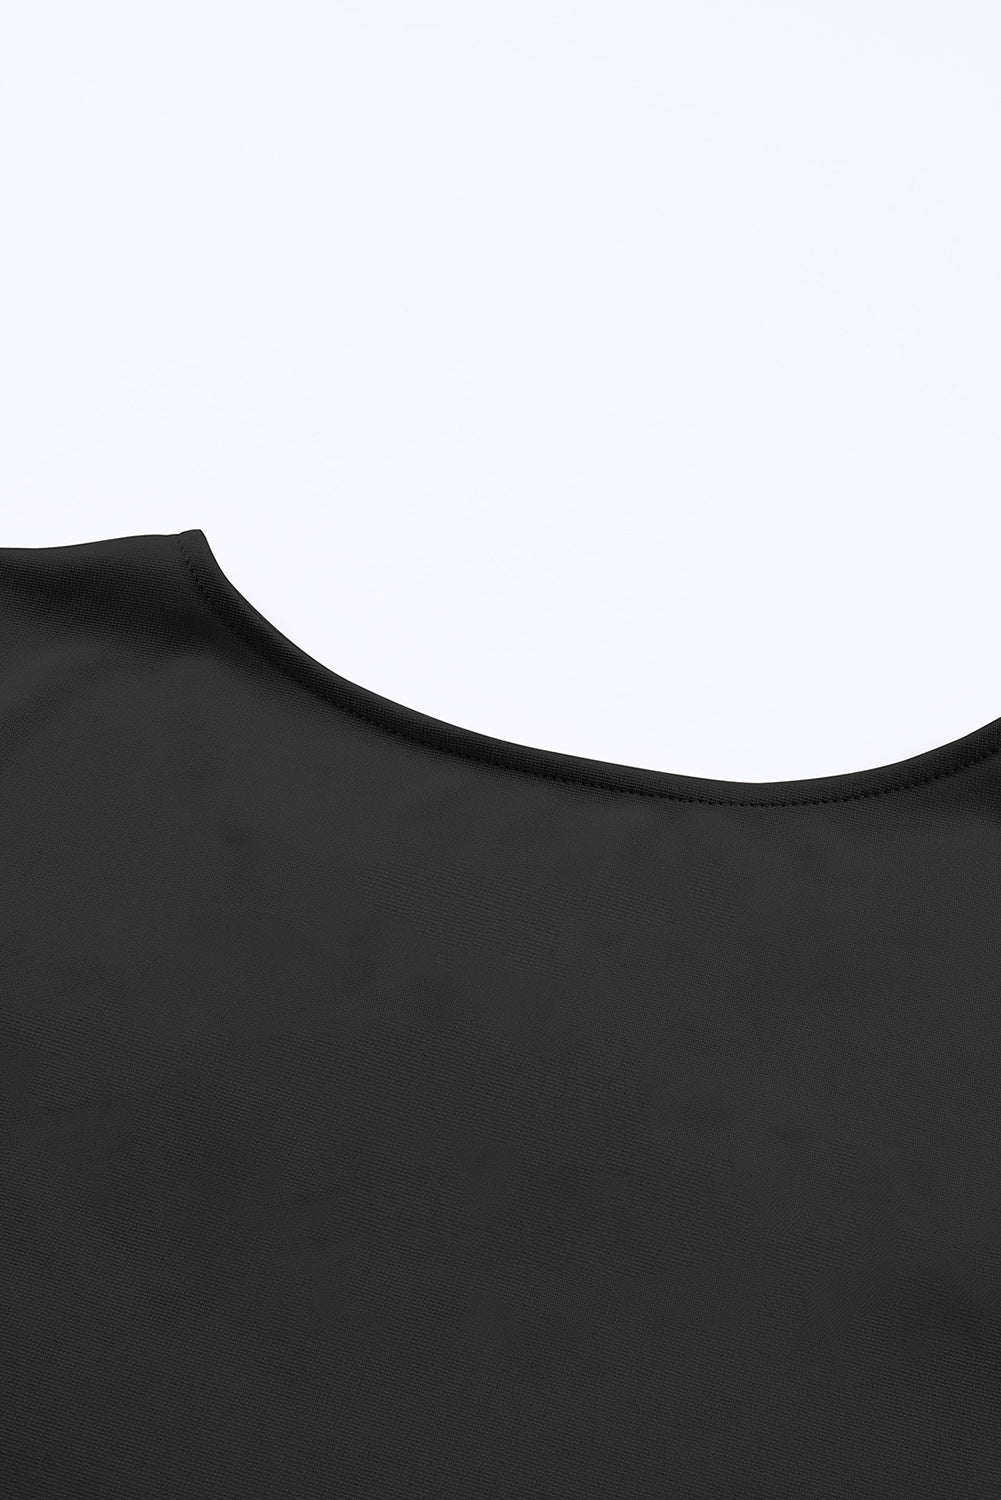 Dark Slate Gray Plus Size Cutout Round Neck Short Sleeve Tee Plus Size Clothes